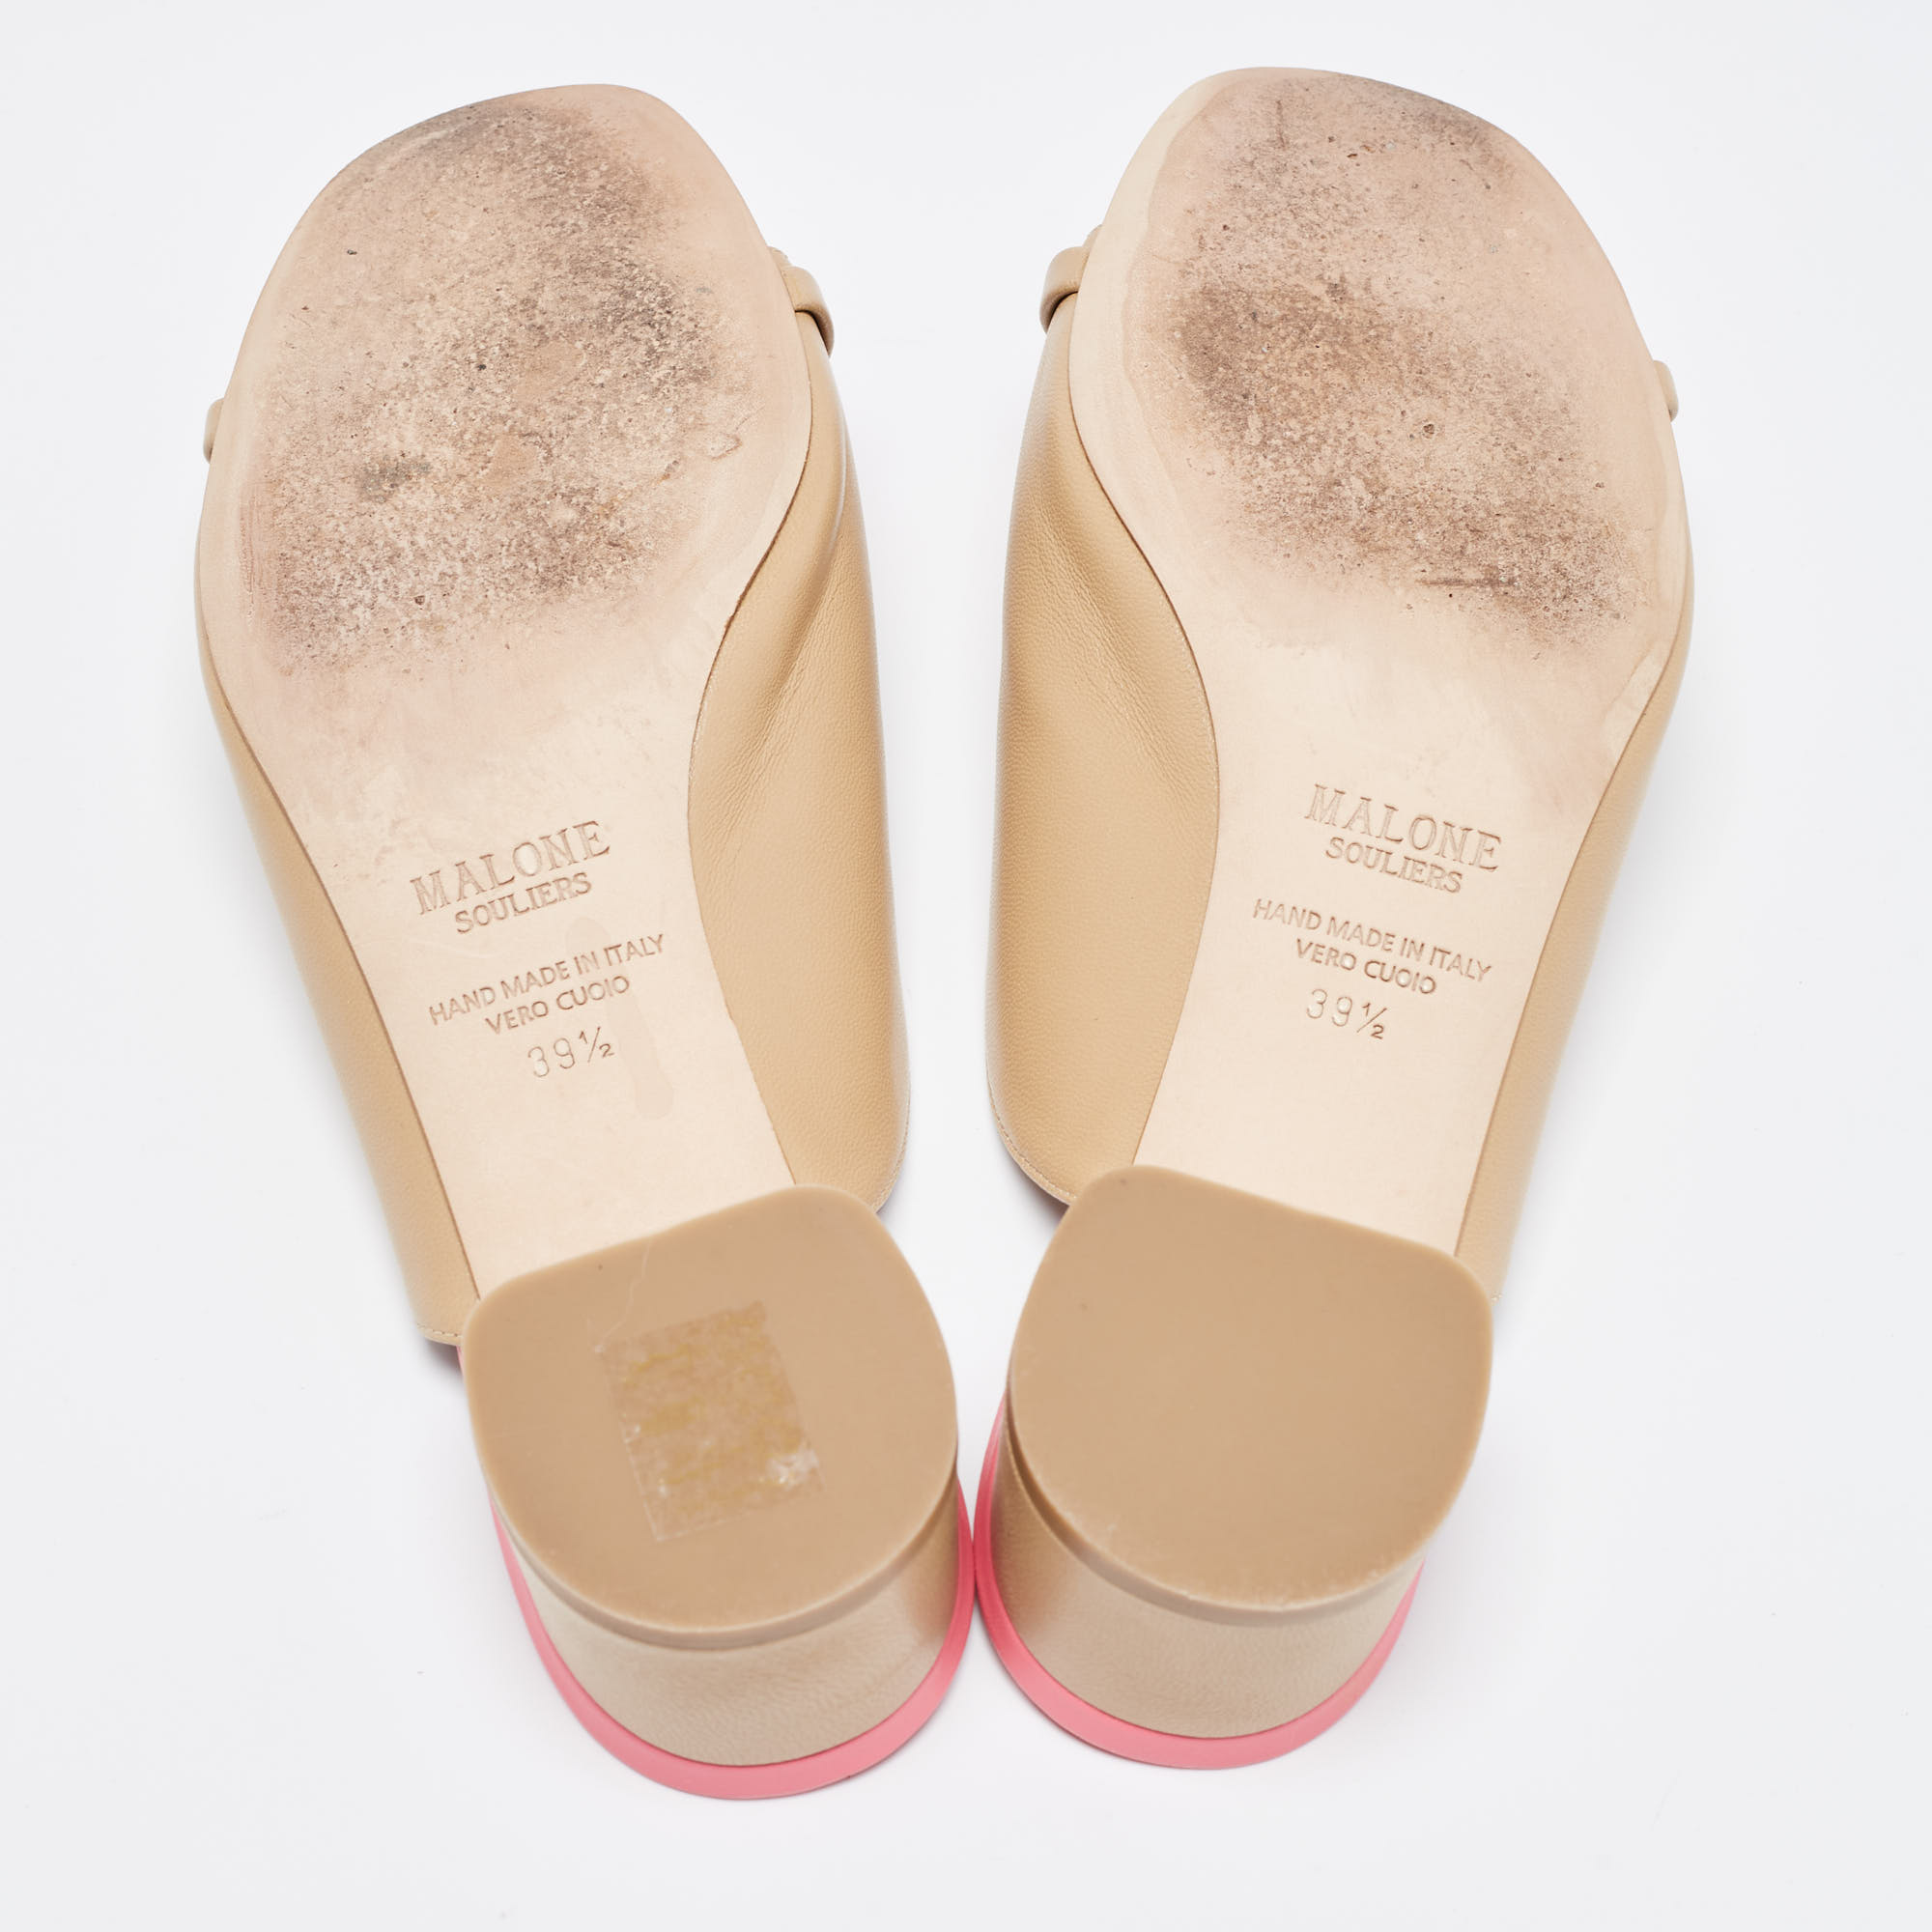 Malone Souliers Beige/Pink Leather Sena Slide Sandals Size 39.5